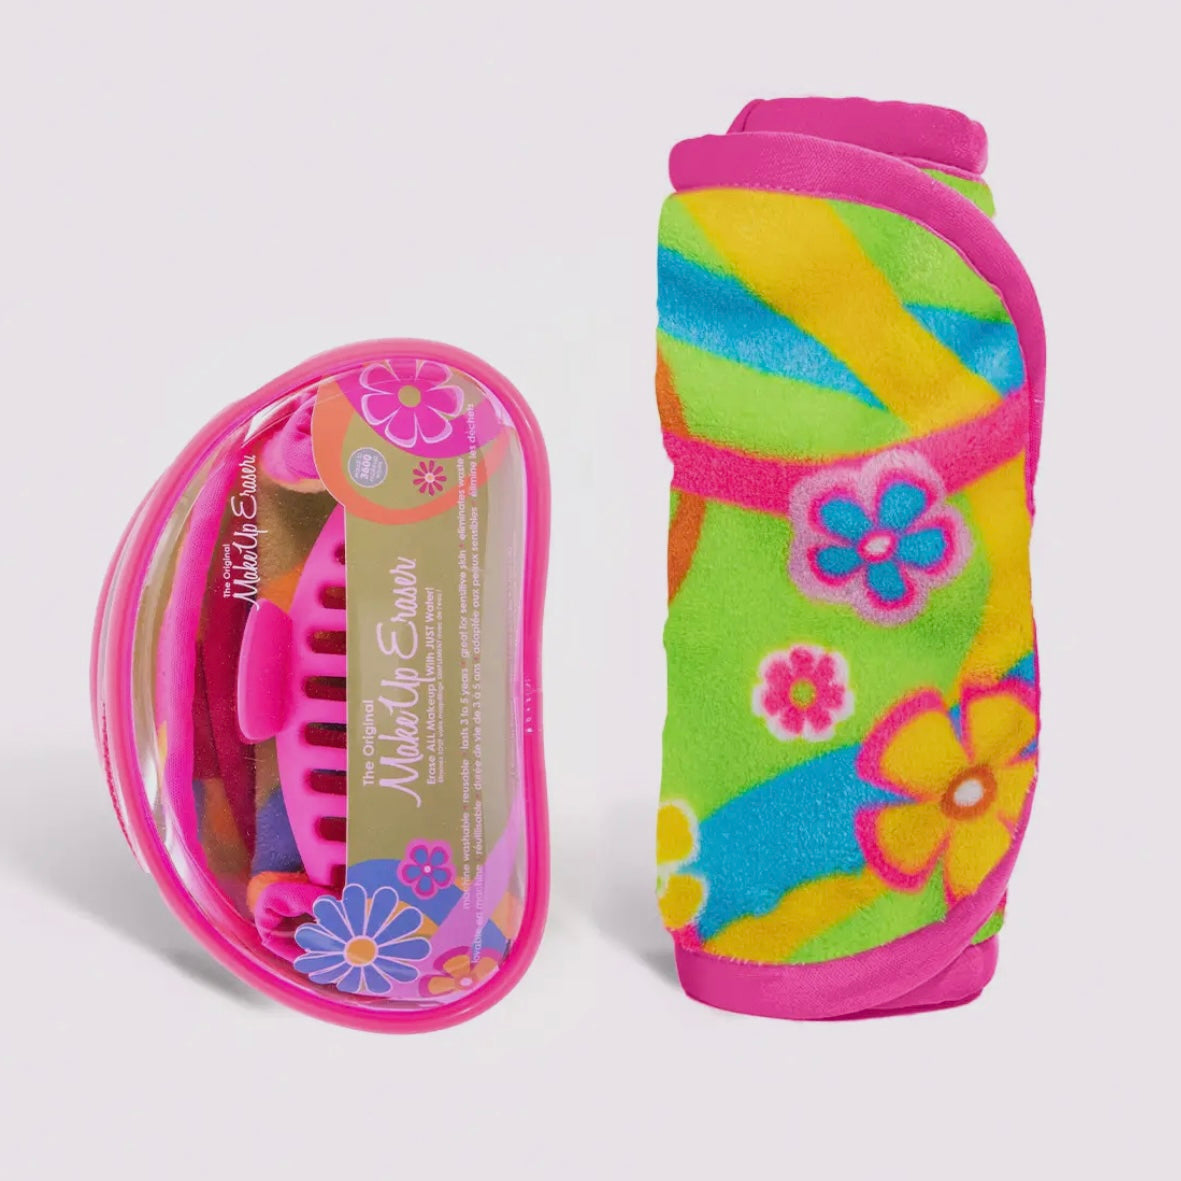 MakeUp Eraser Flowerbomb Gift Set